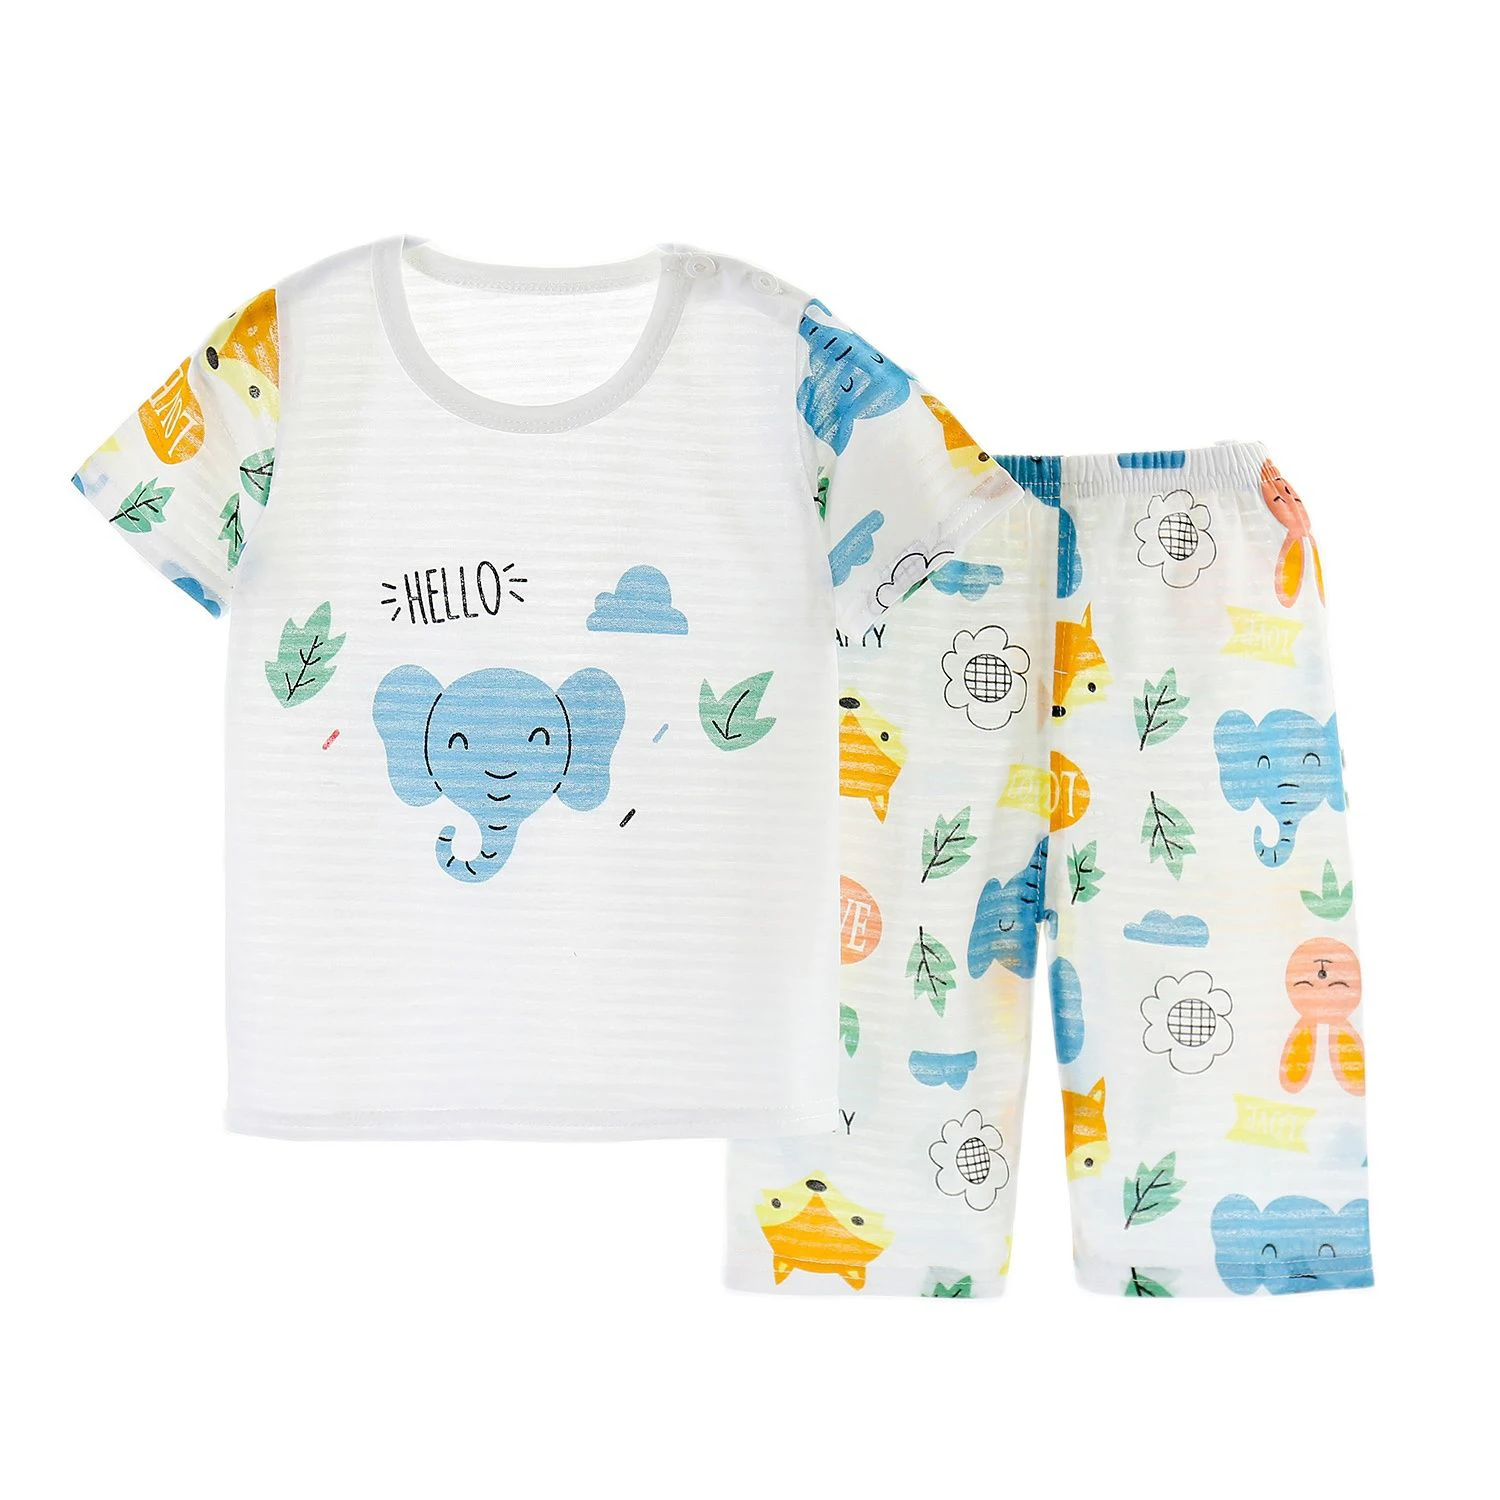 

Unini-yun New Unisex Baby Girls Boys 2 Pcs Sets Clothing 2021 Summer Kids Clothes Cartoon Elephant Printing Cotton Short-sleeve